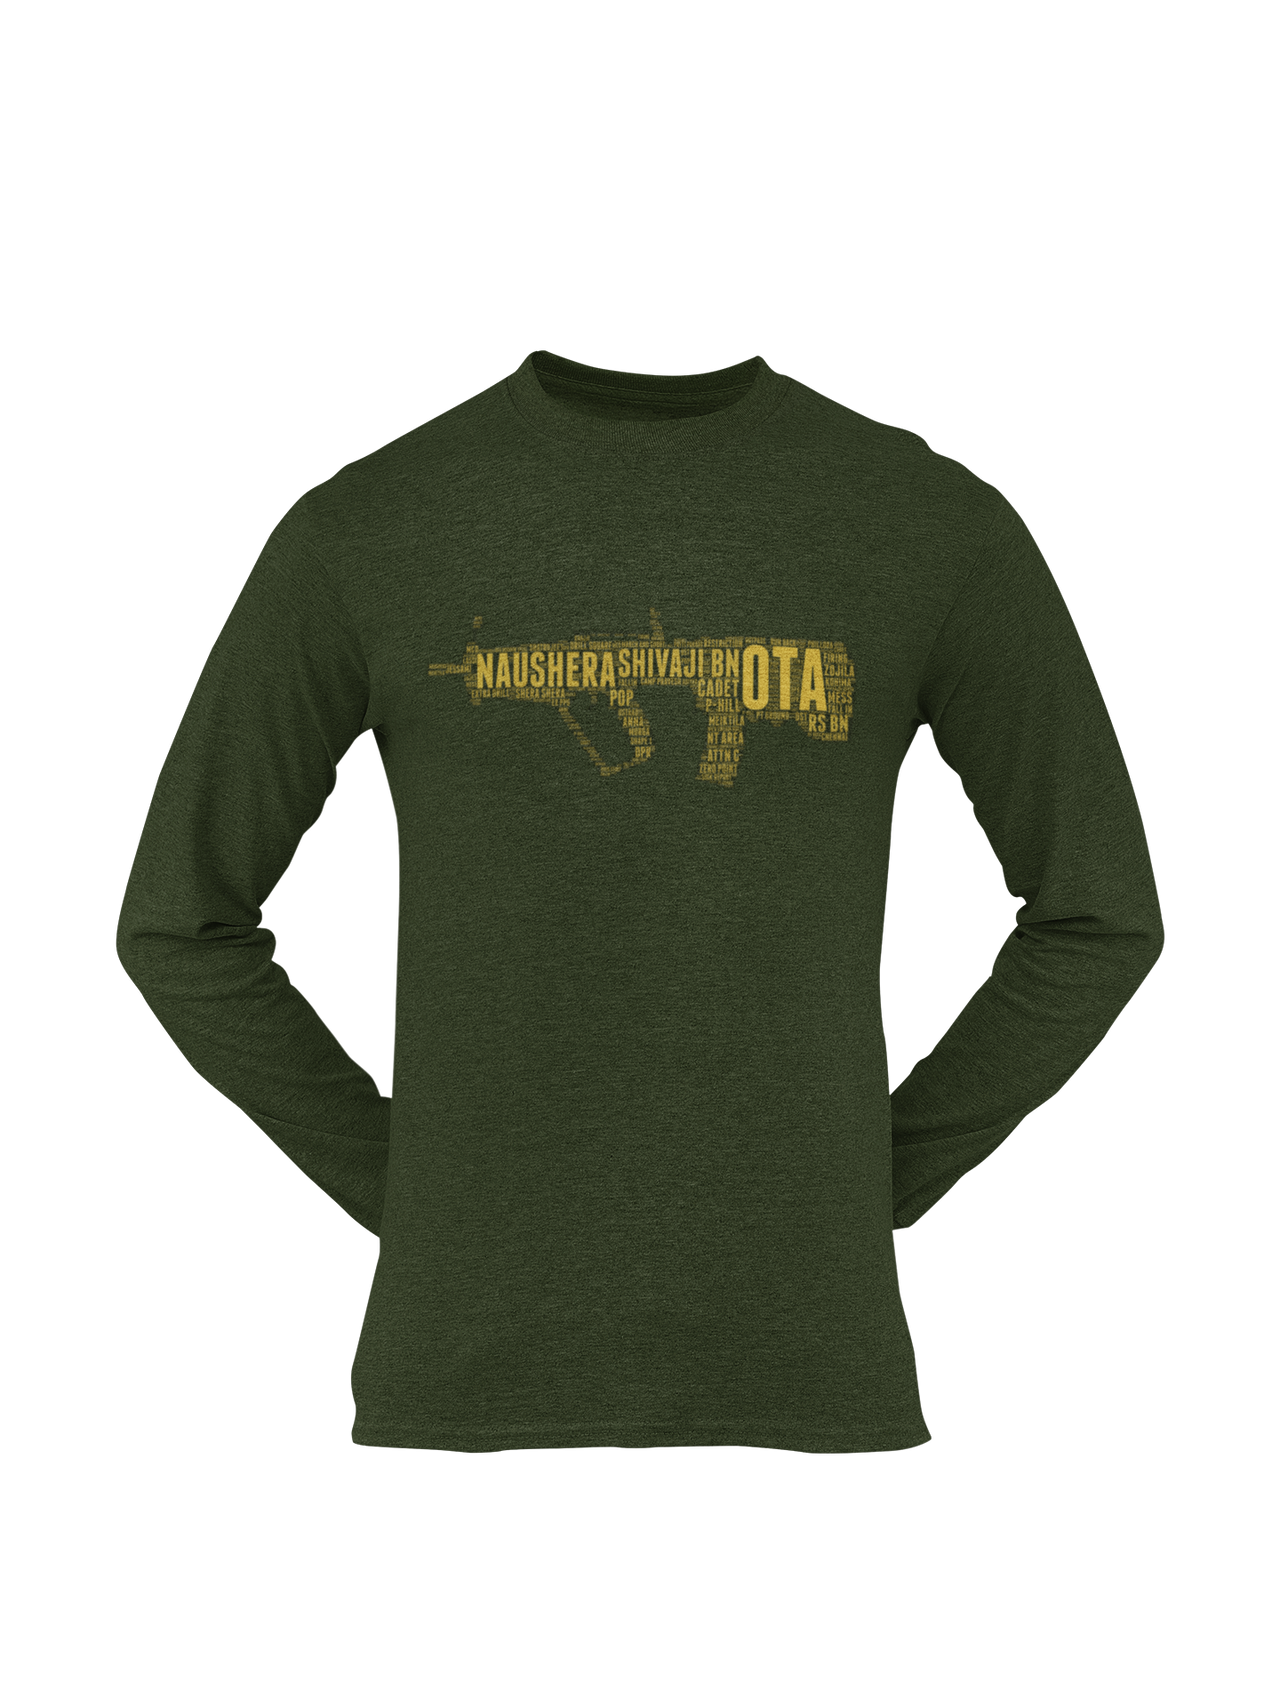 OTA T-shirt - Word Cloud Naushera - Tavor (Men)